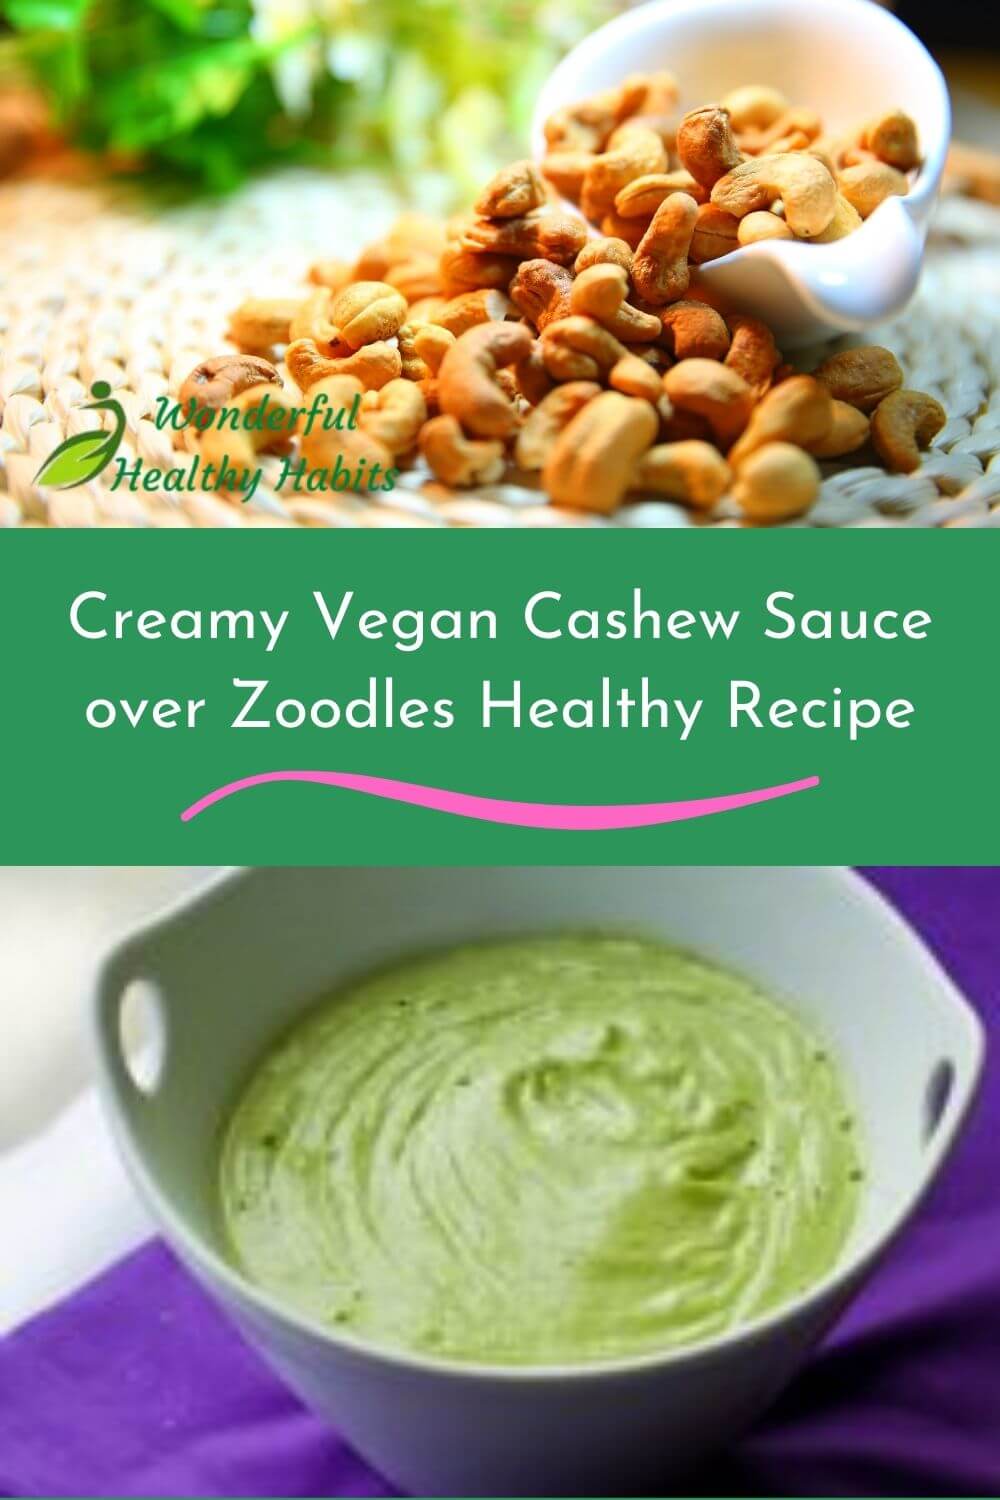 Creamy Vegan Cashew Sauce over Zoodles Healthy Recipe